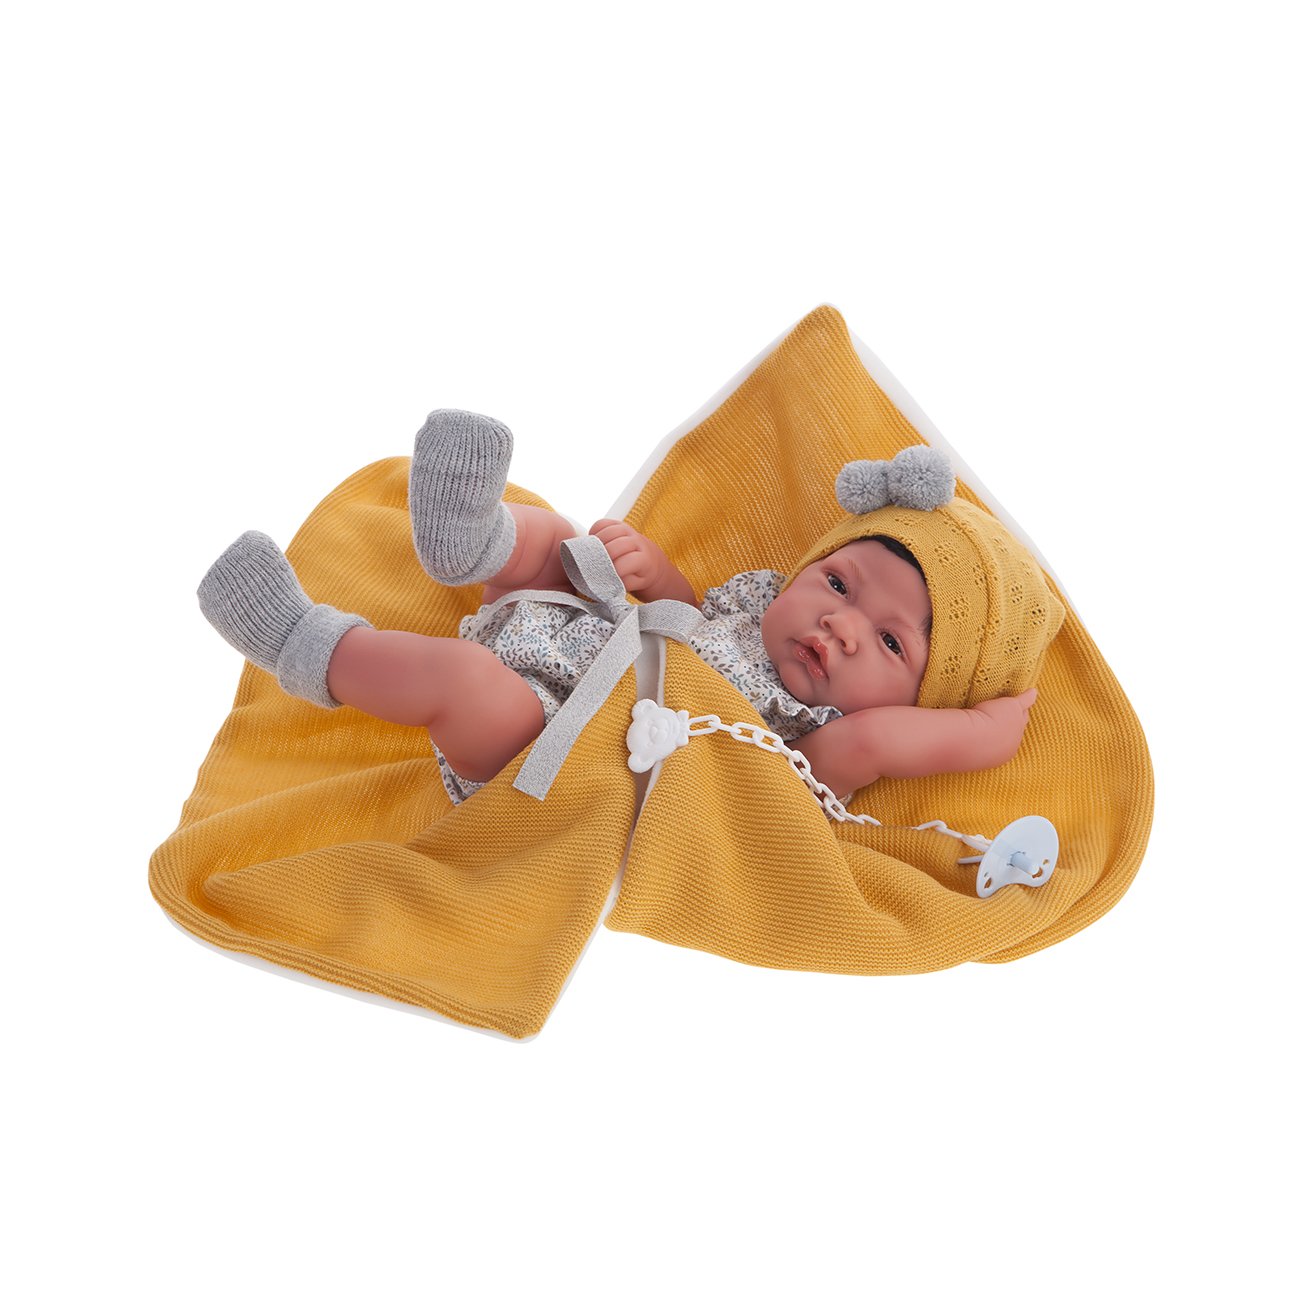 Papusa bebe realist Nacido corp anatomic corect, accesorii galbene, 42 cm, +3, Antonio Juan